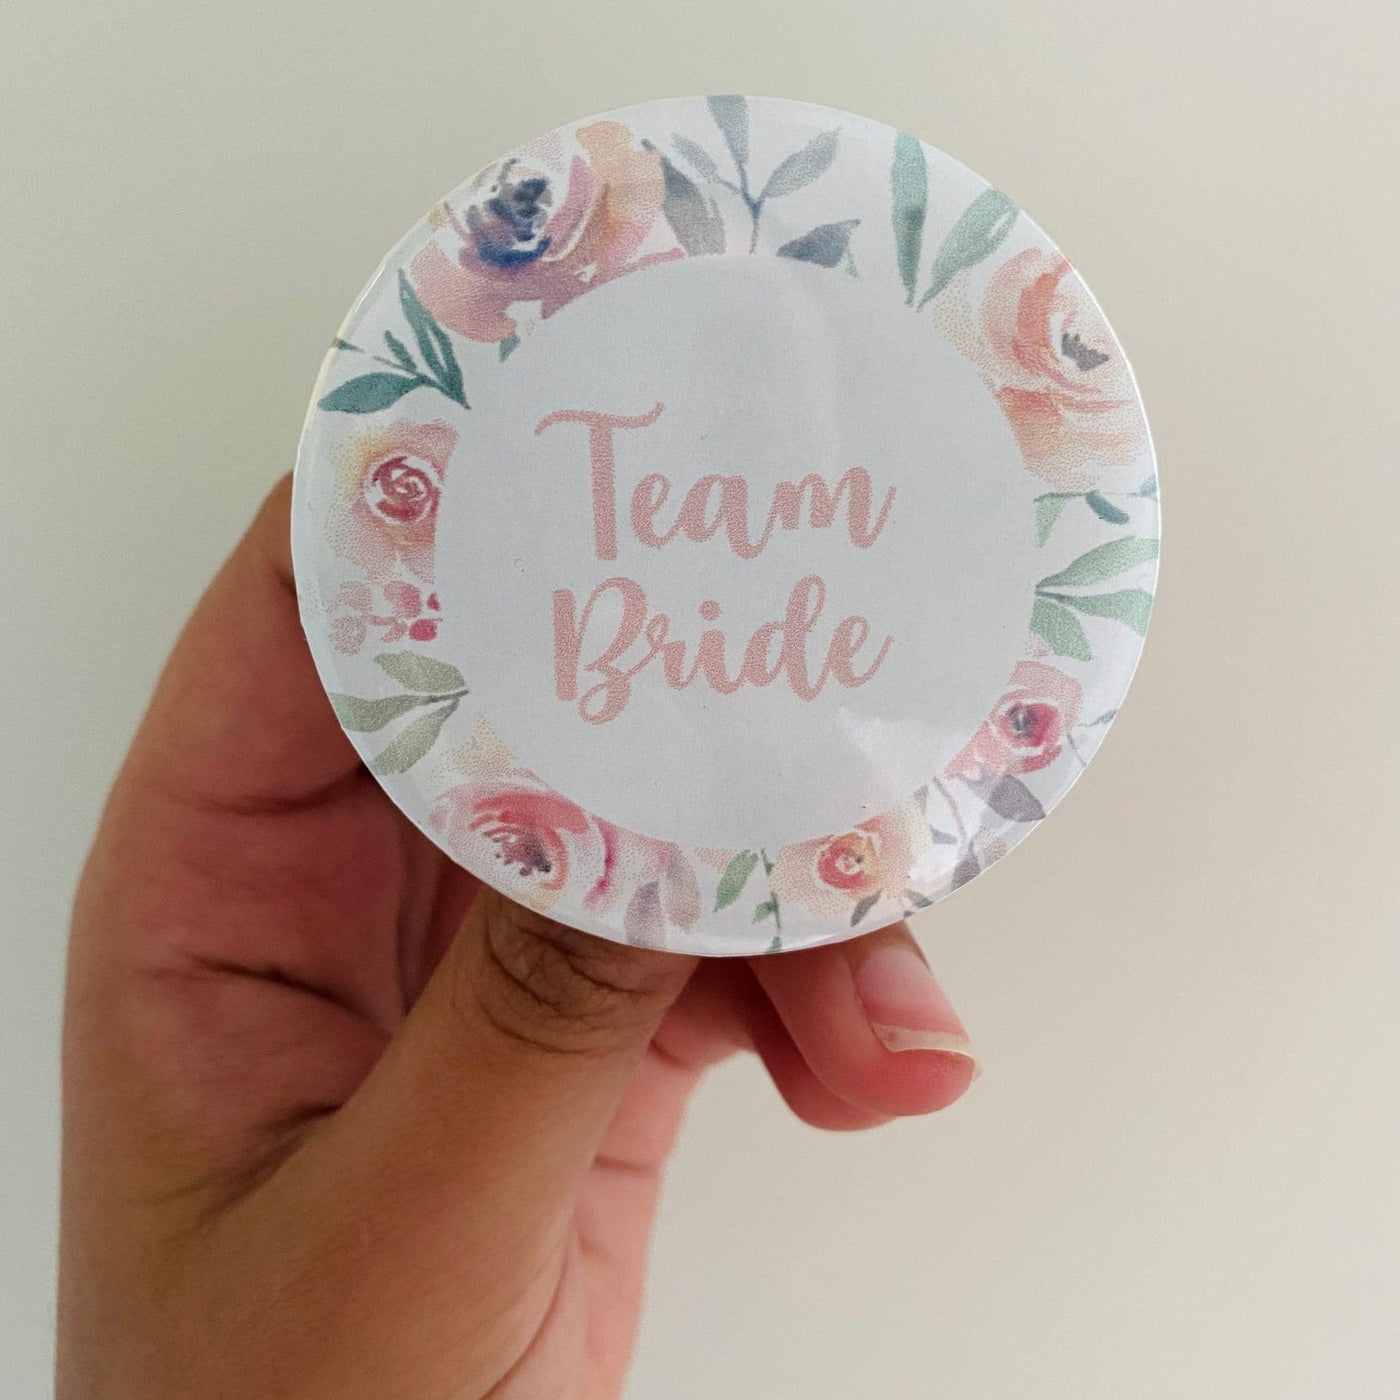 Team Bride | Button Pin - The Local Space